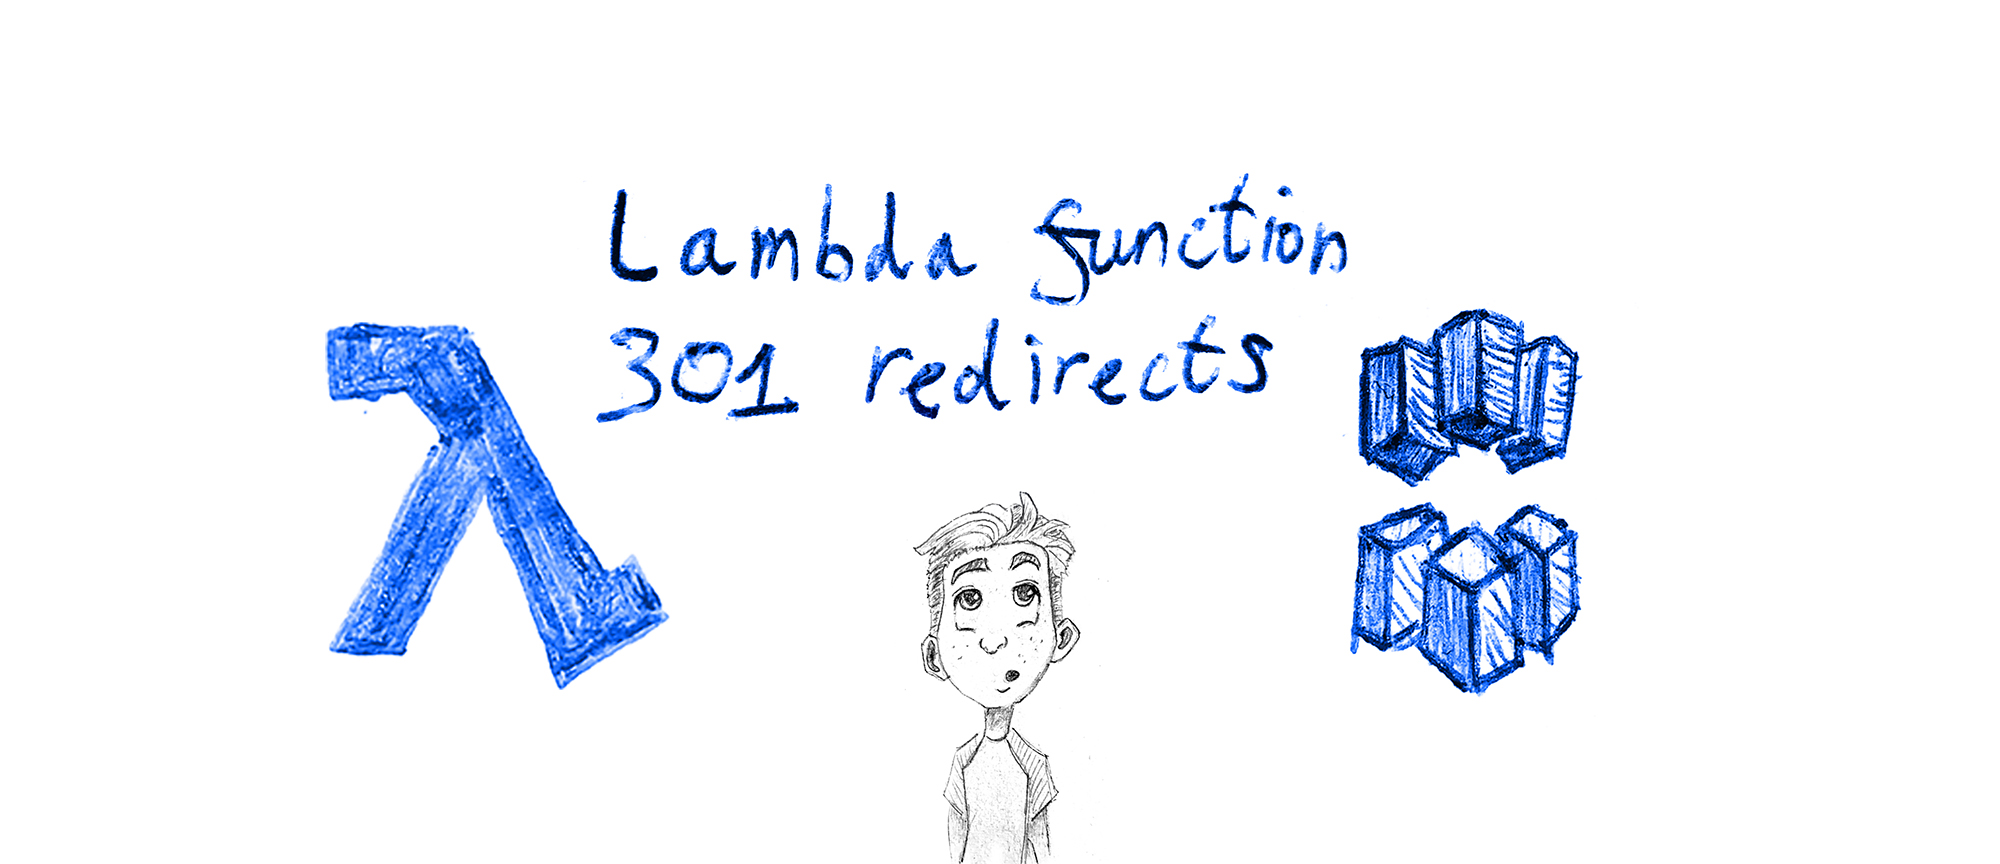 Lambda function 301 redirects